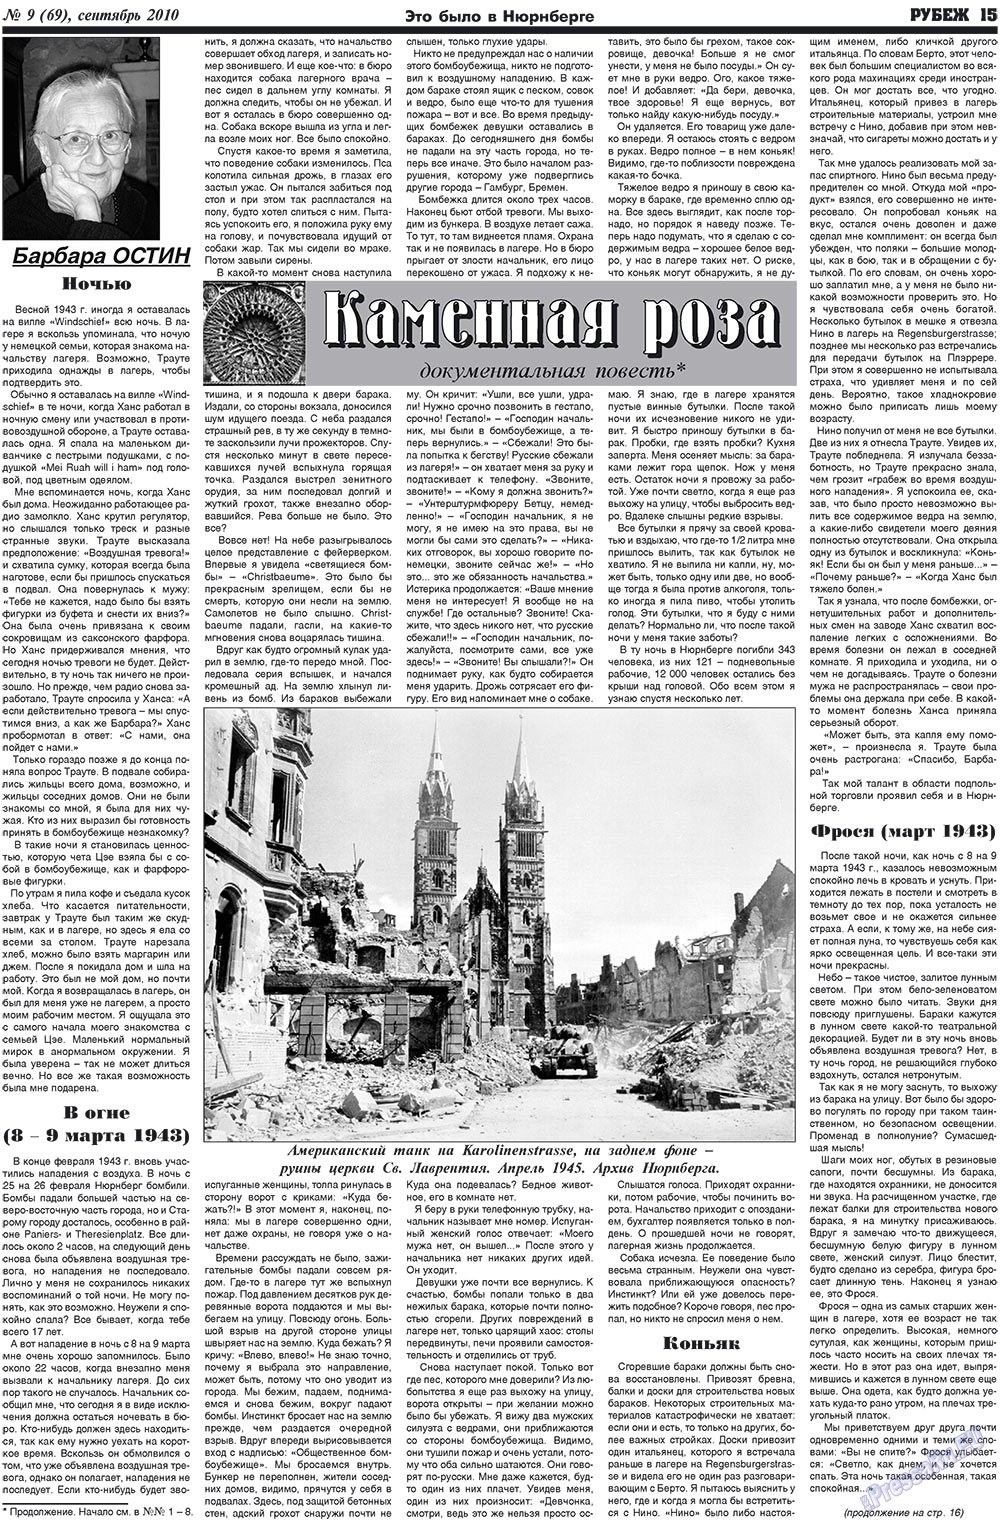 Рубеж, газета. 2010 №9 стр.15